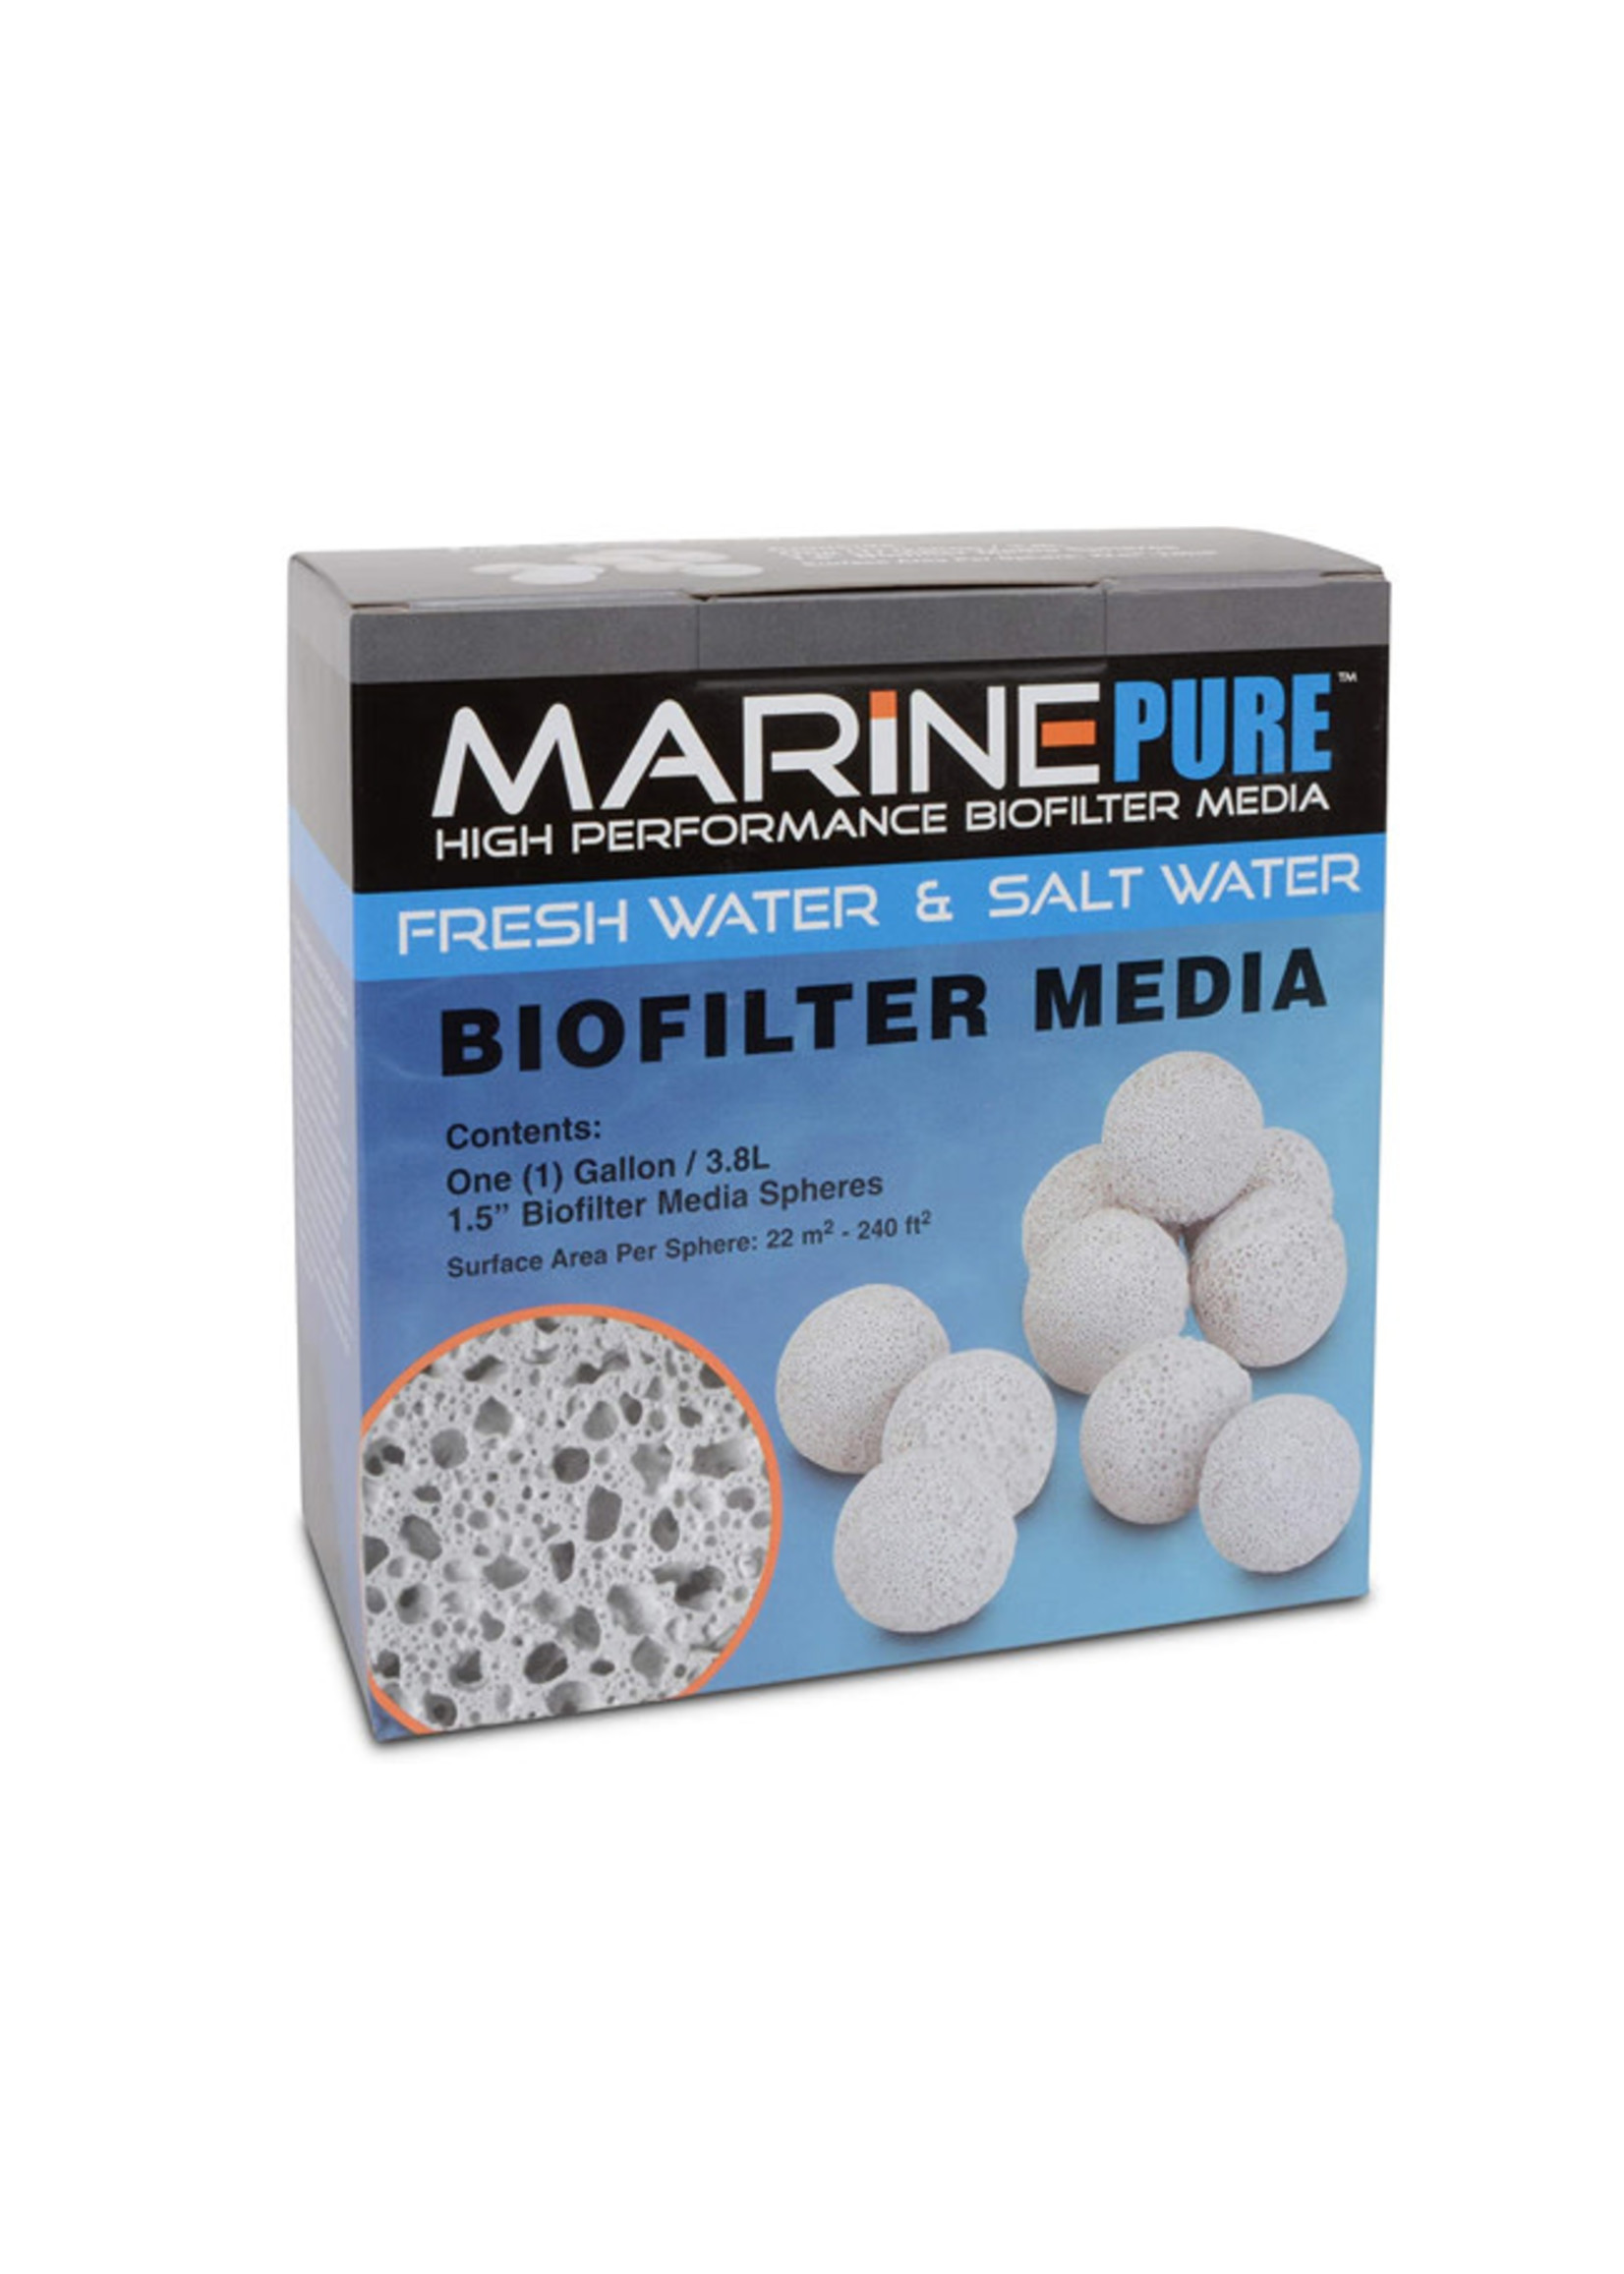 MarinePure MarinePure High Performance Biofilter Media Spheres